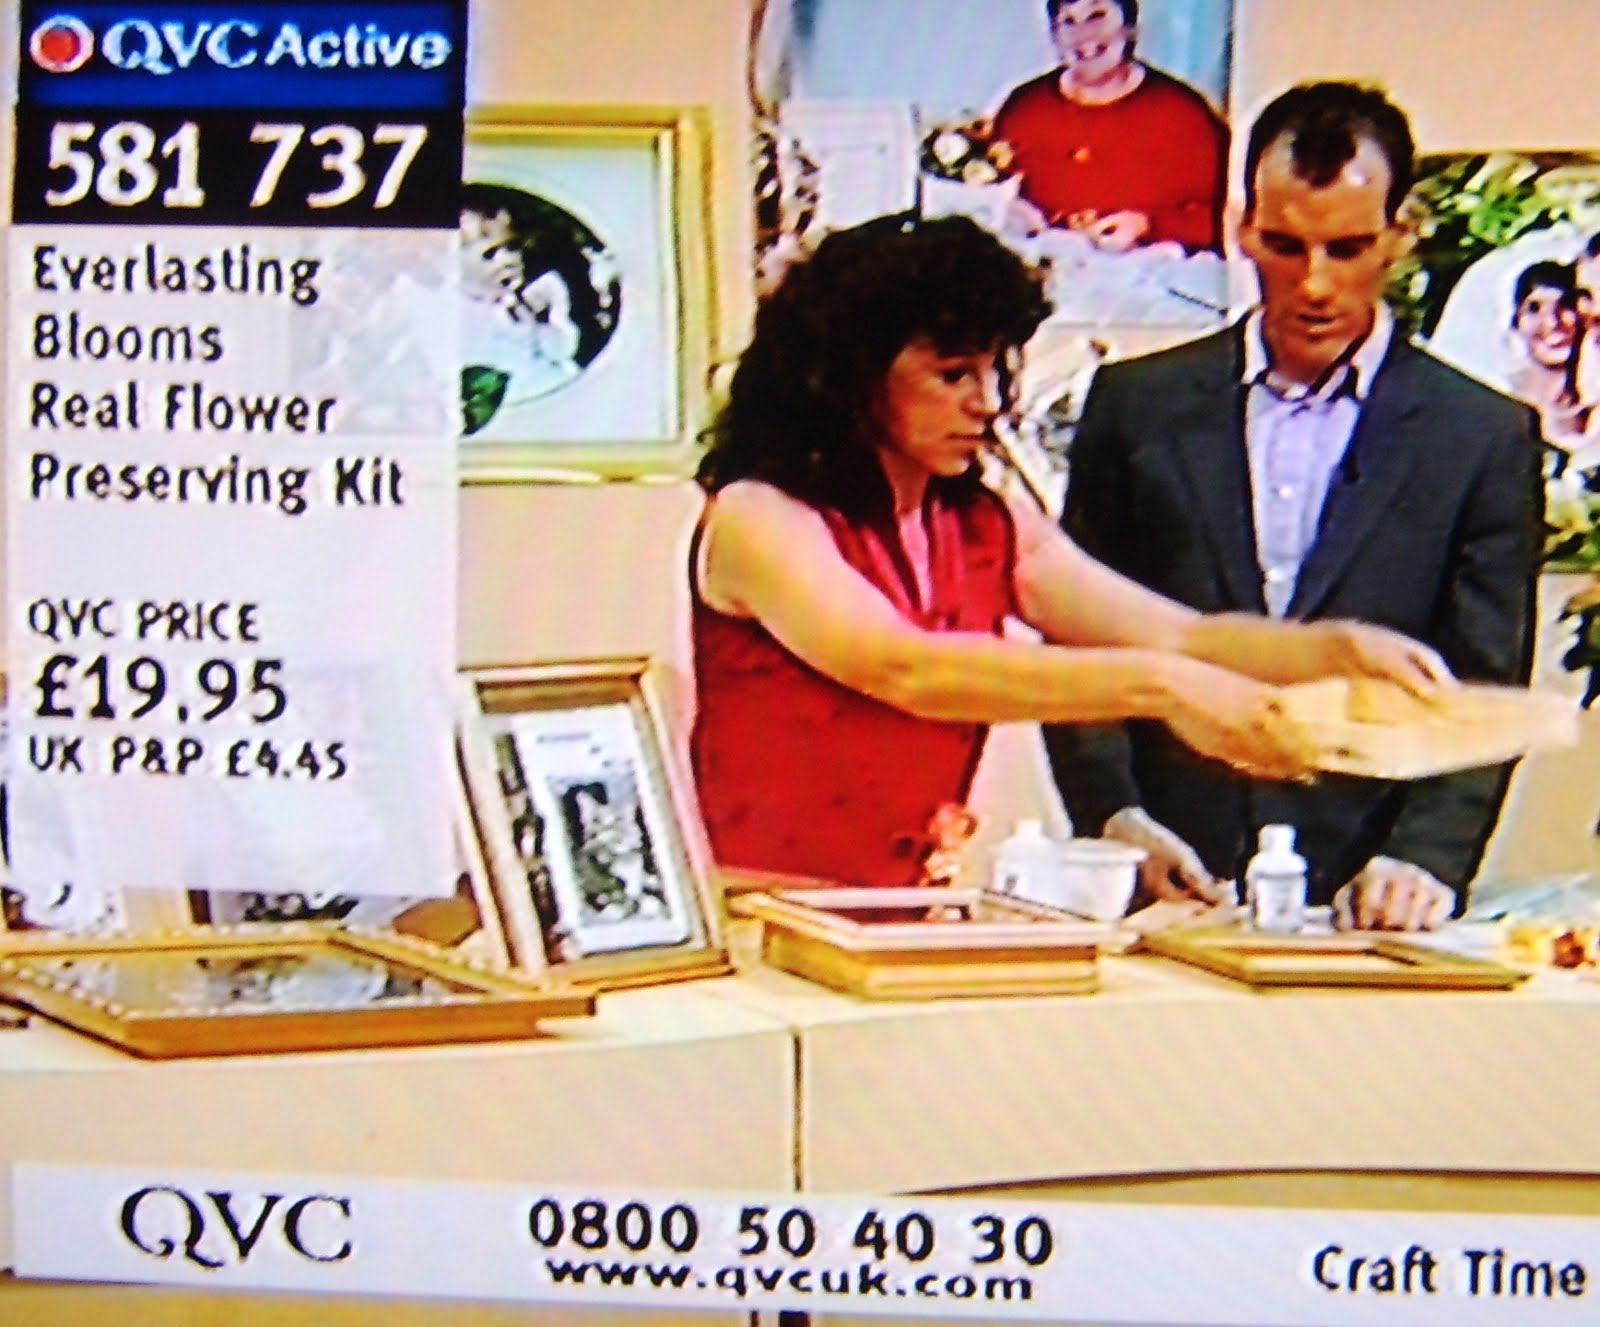 Andrea Webster QVC demonstration of Real Flower Preserve kit on You Tube